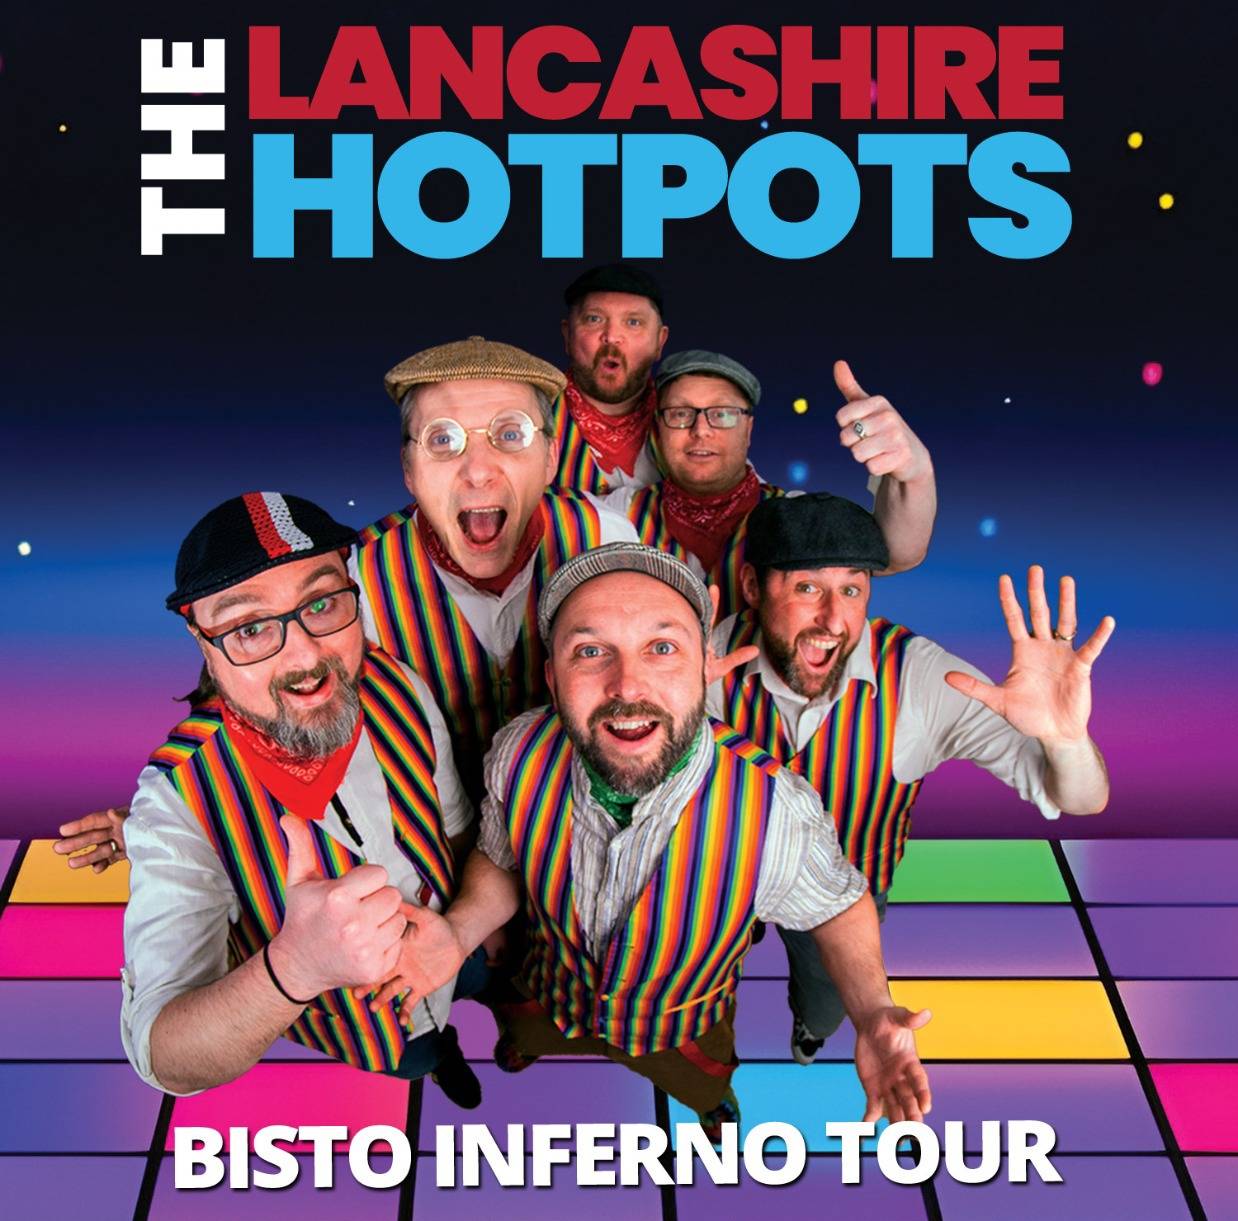 The Lancashire Hotpots Bisto Inferno tour promotional image